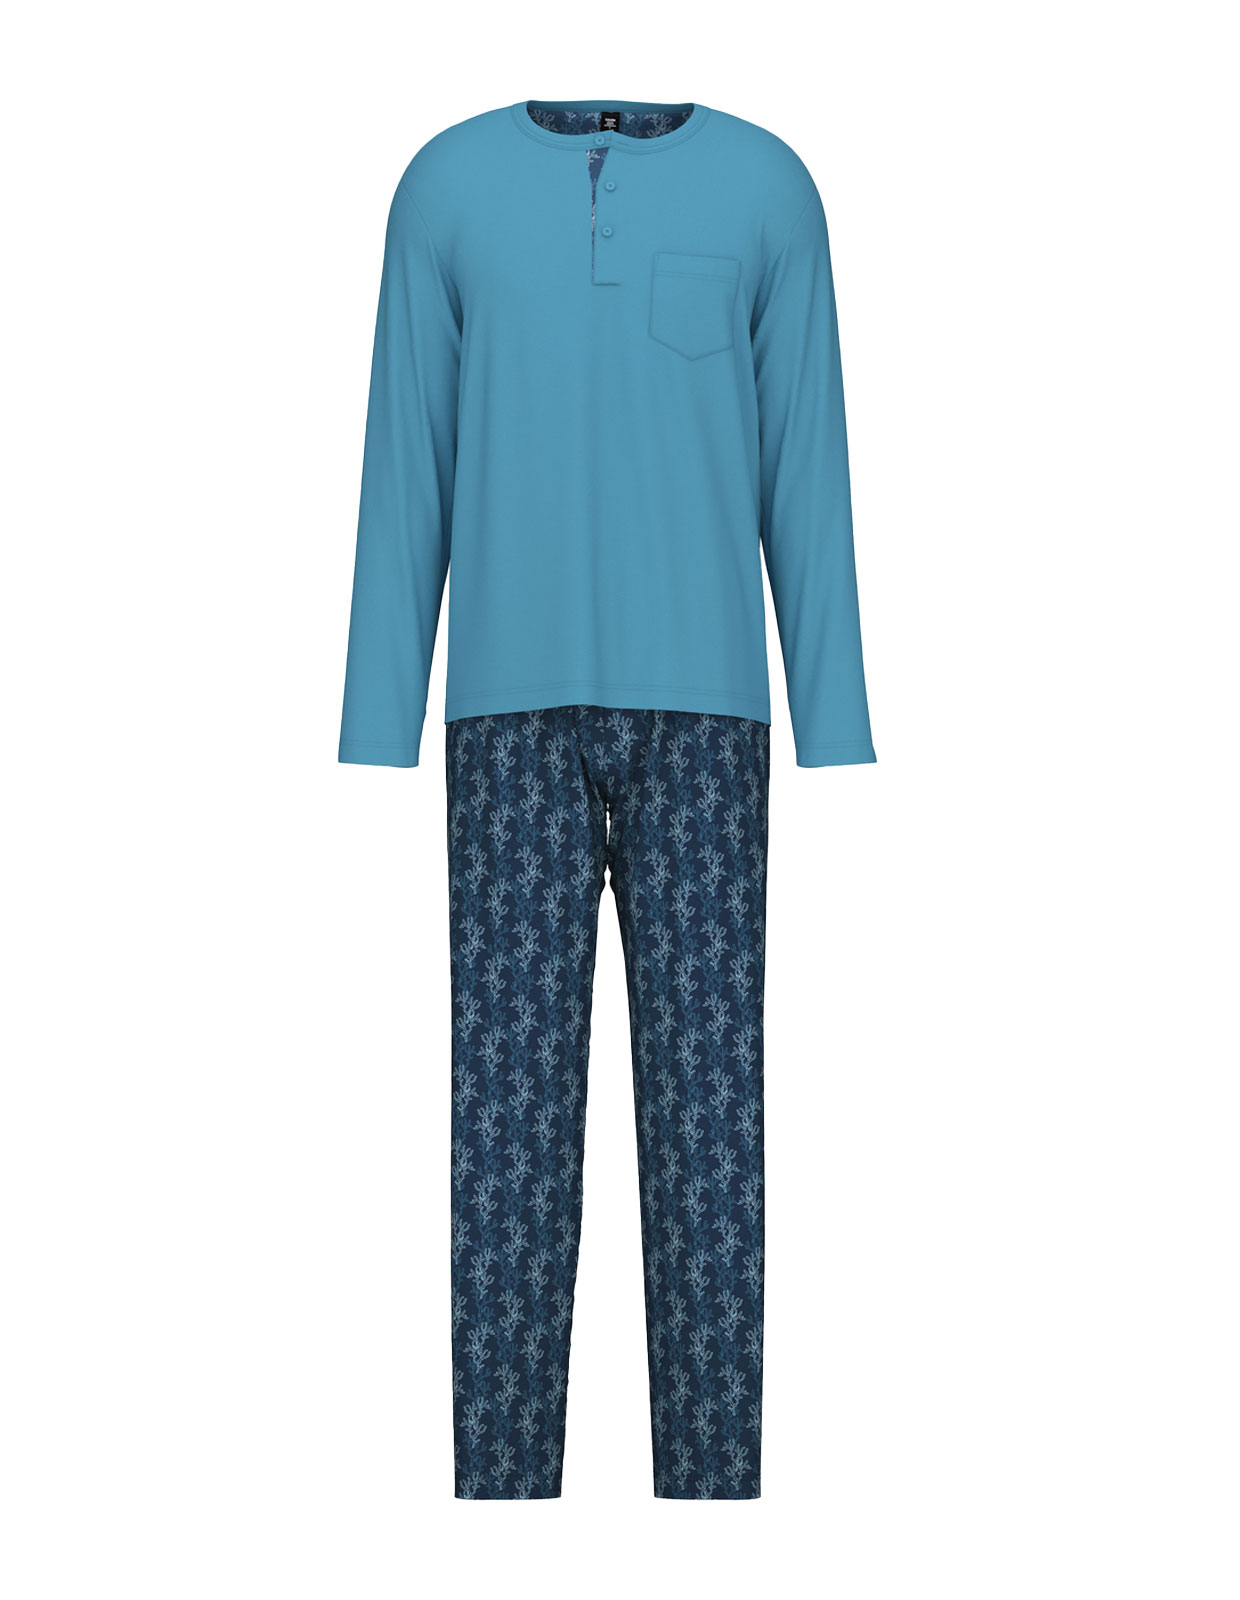 Pyjamas Blå Stl L